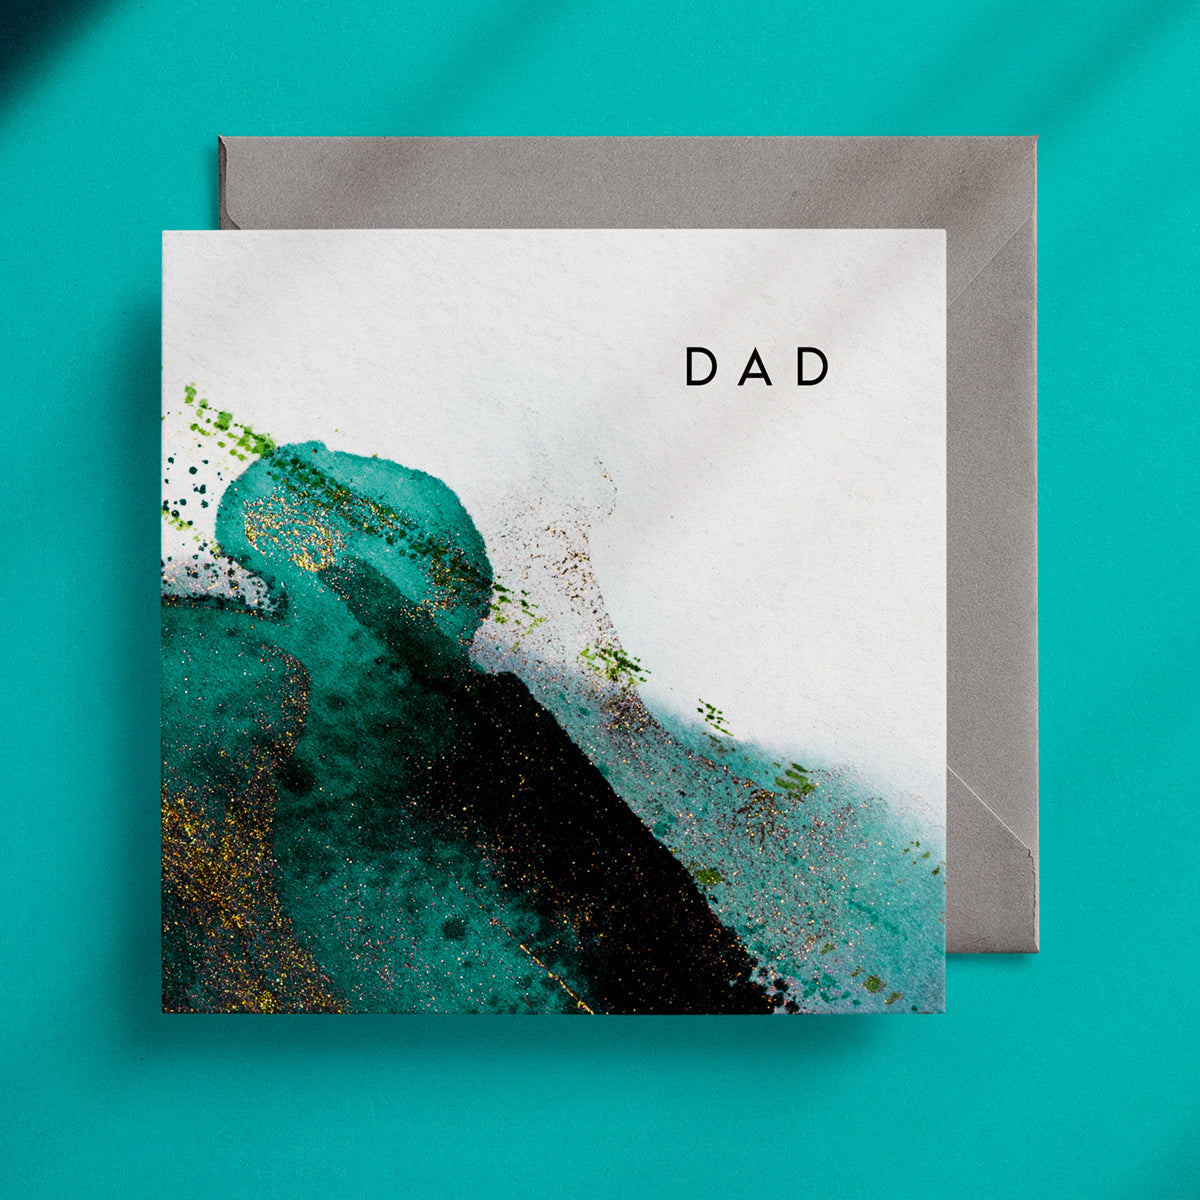 Dad - ABSTRACT Greeting Card